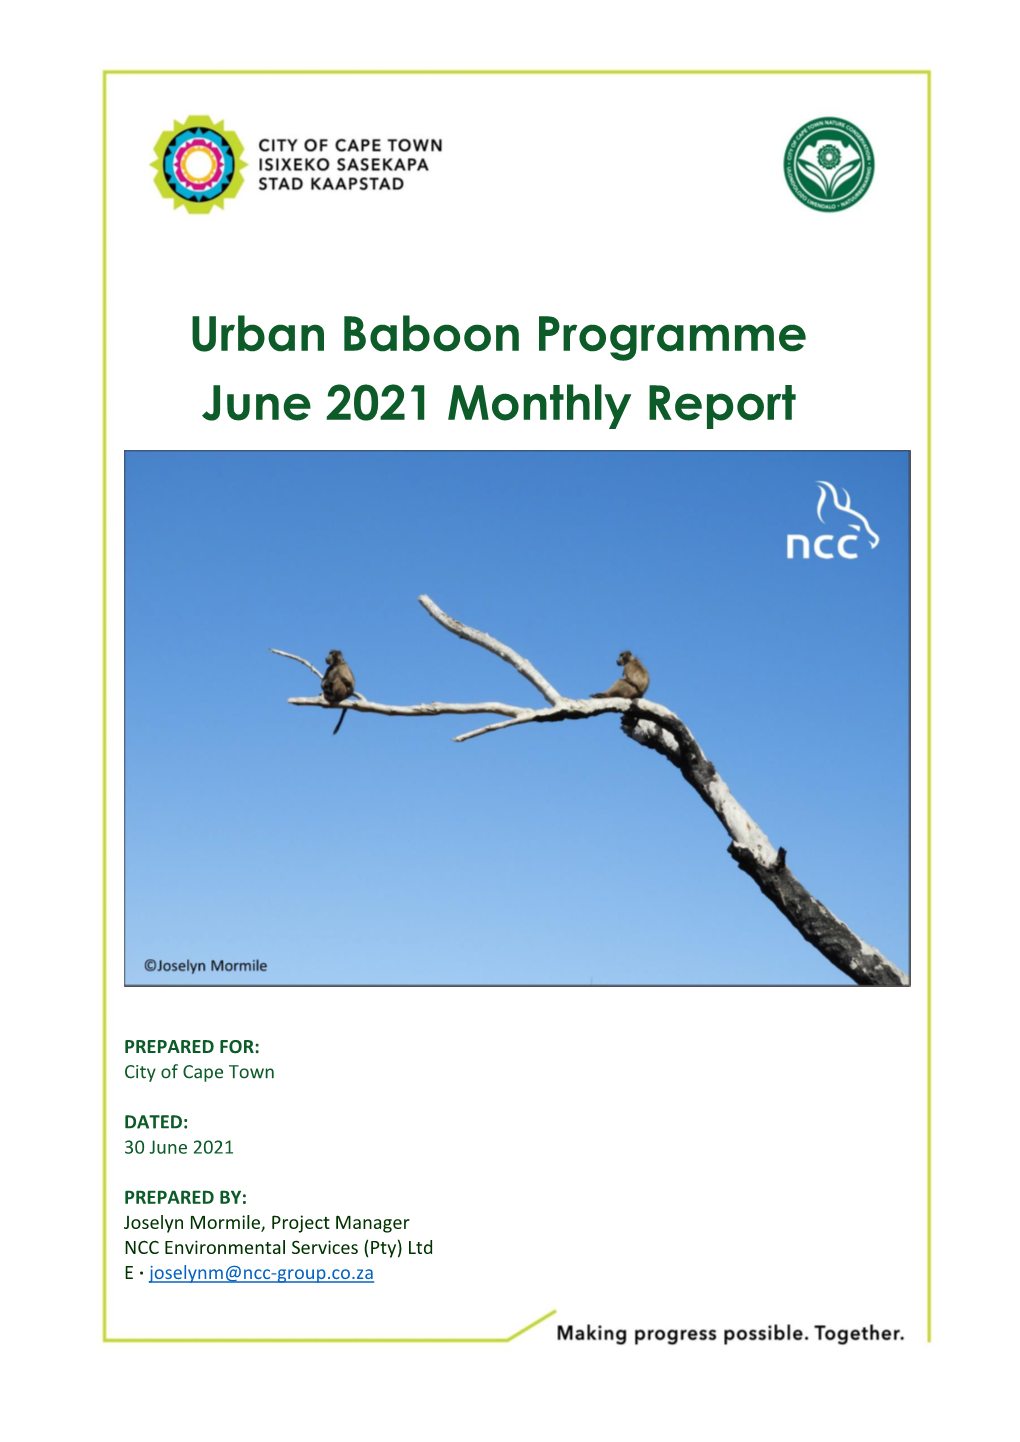 Urban Baboon Programme June 2021 Monthly Report